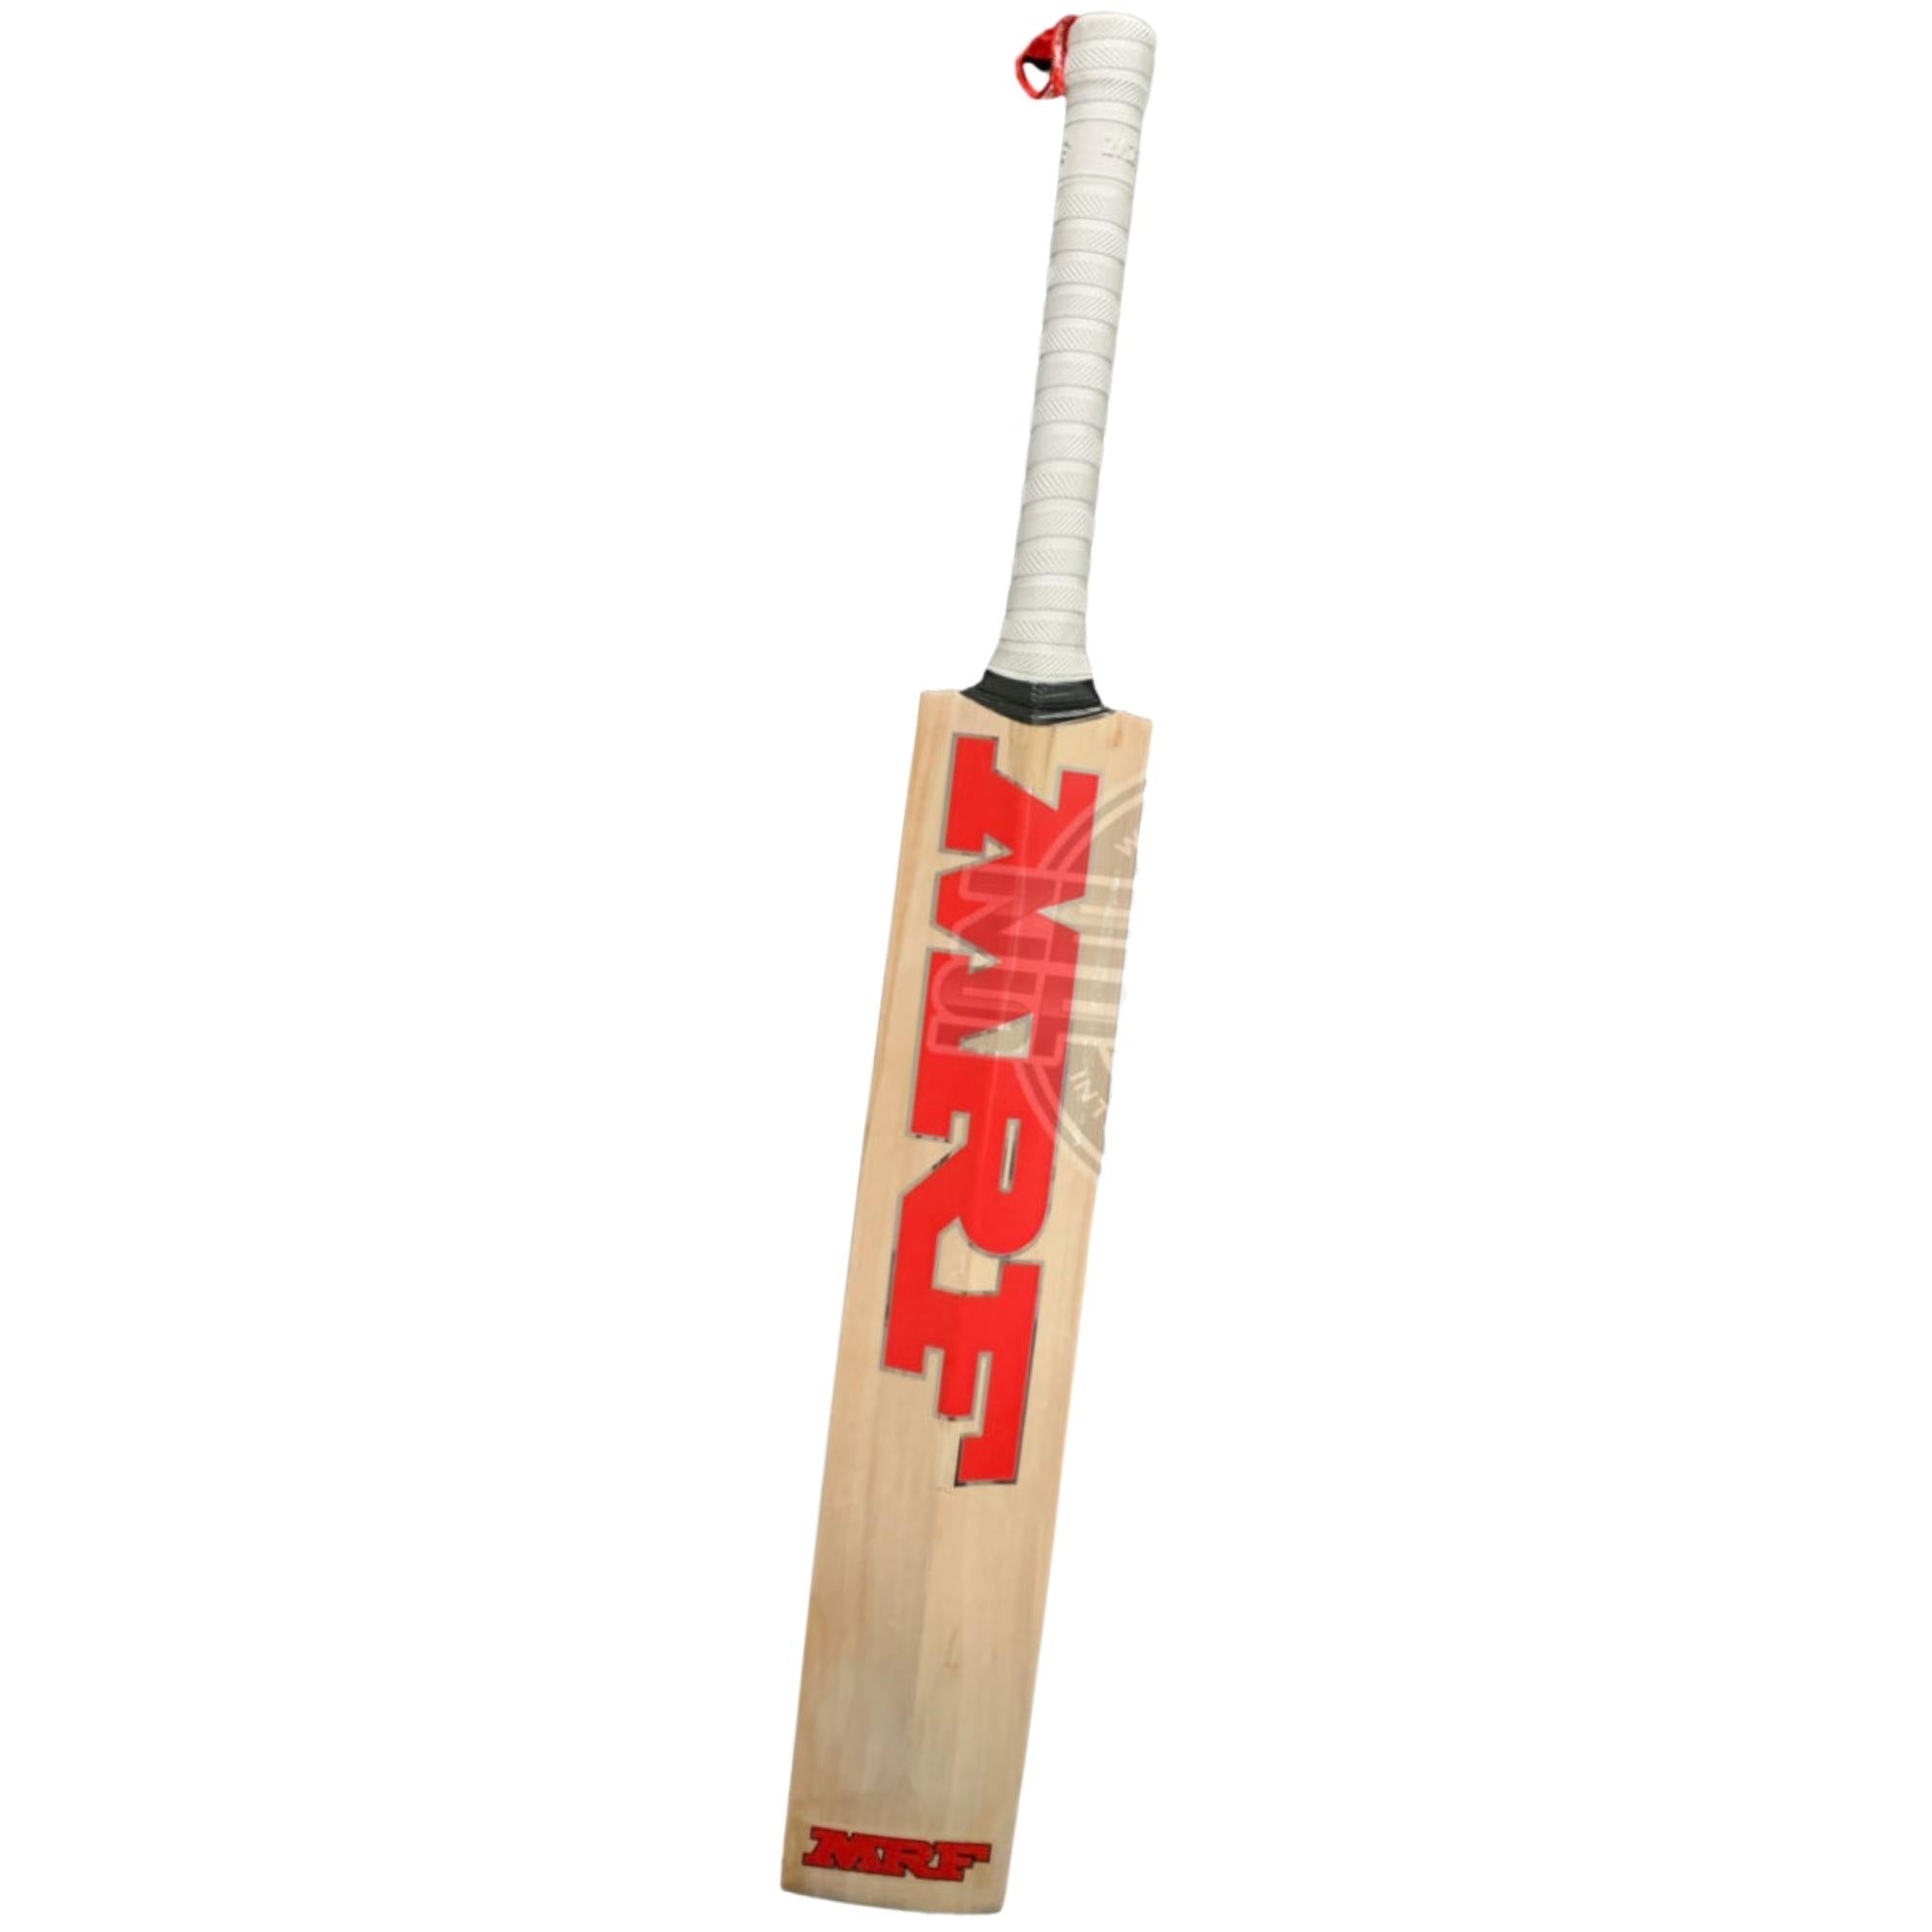 MRF Cricket Bat VK18 3.0 Virat Kohli Edition